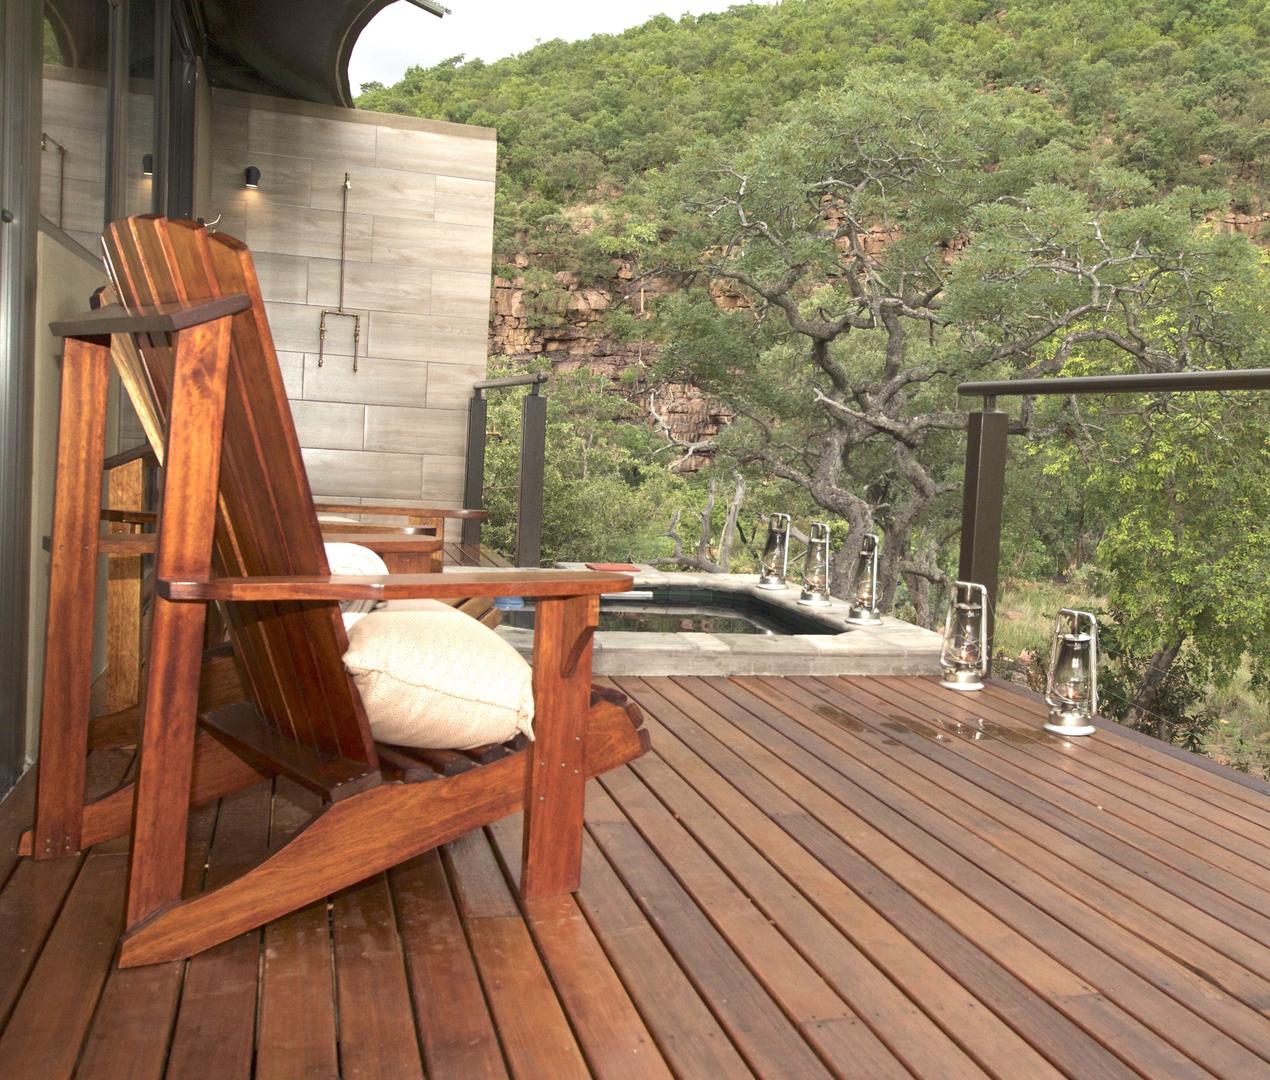 Inzalo Safari Lodge Welgevonden Waterberg Limpopo 22